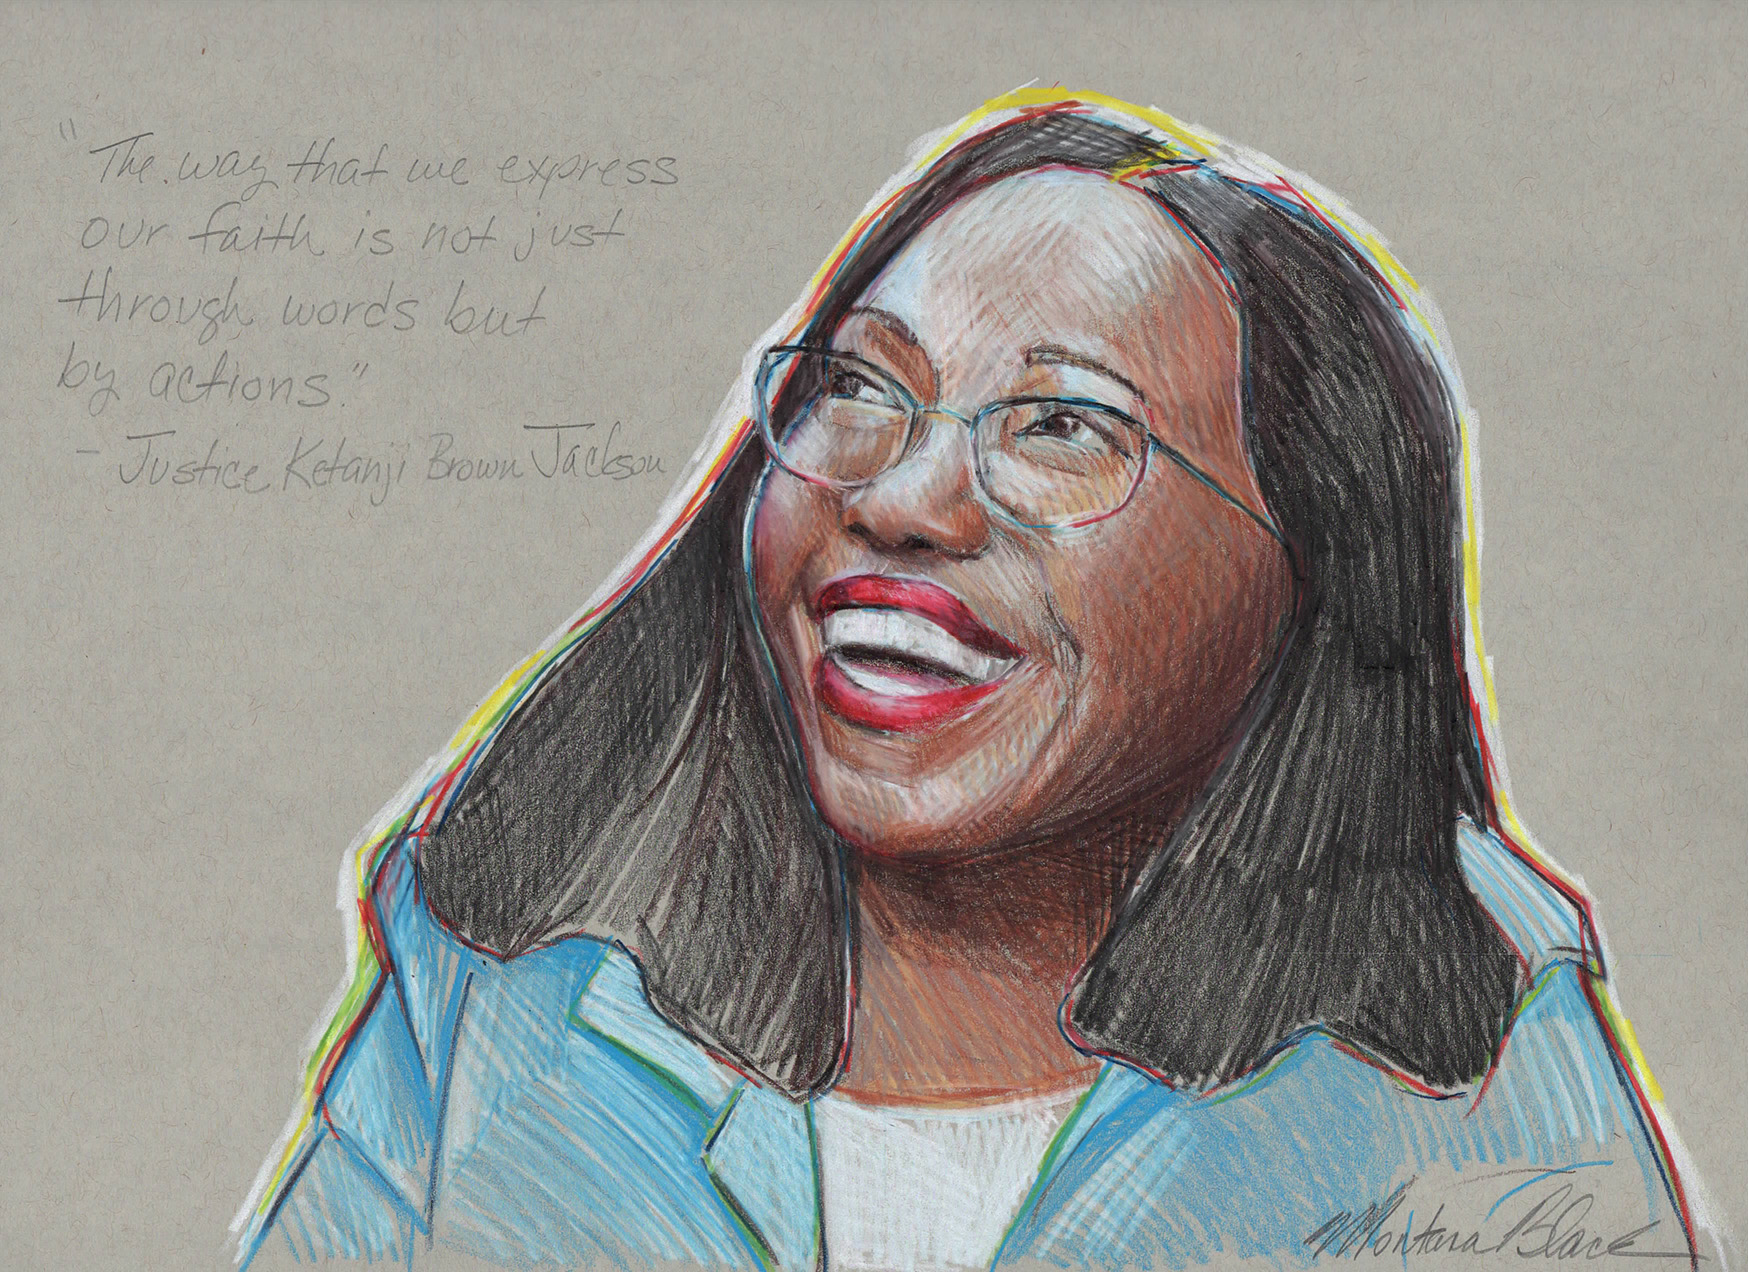 Color pencil drawing of Supreme Court JusticeKetanji Brown Jackson